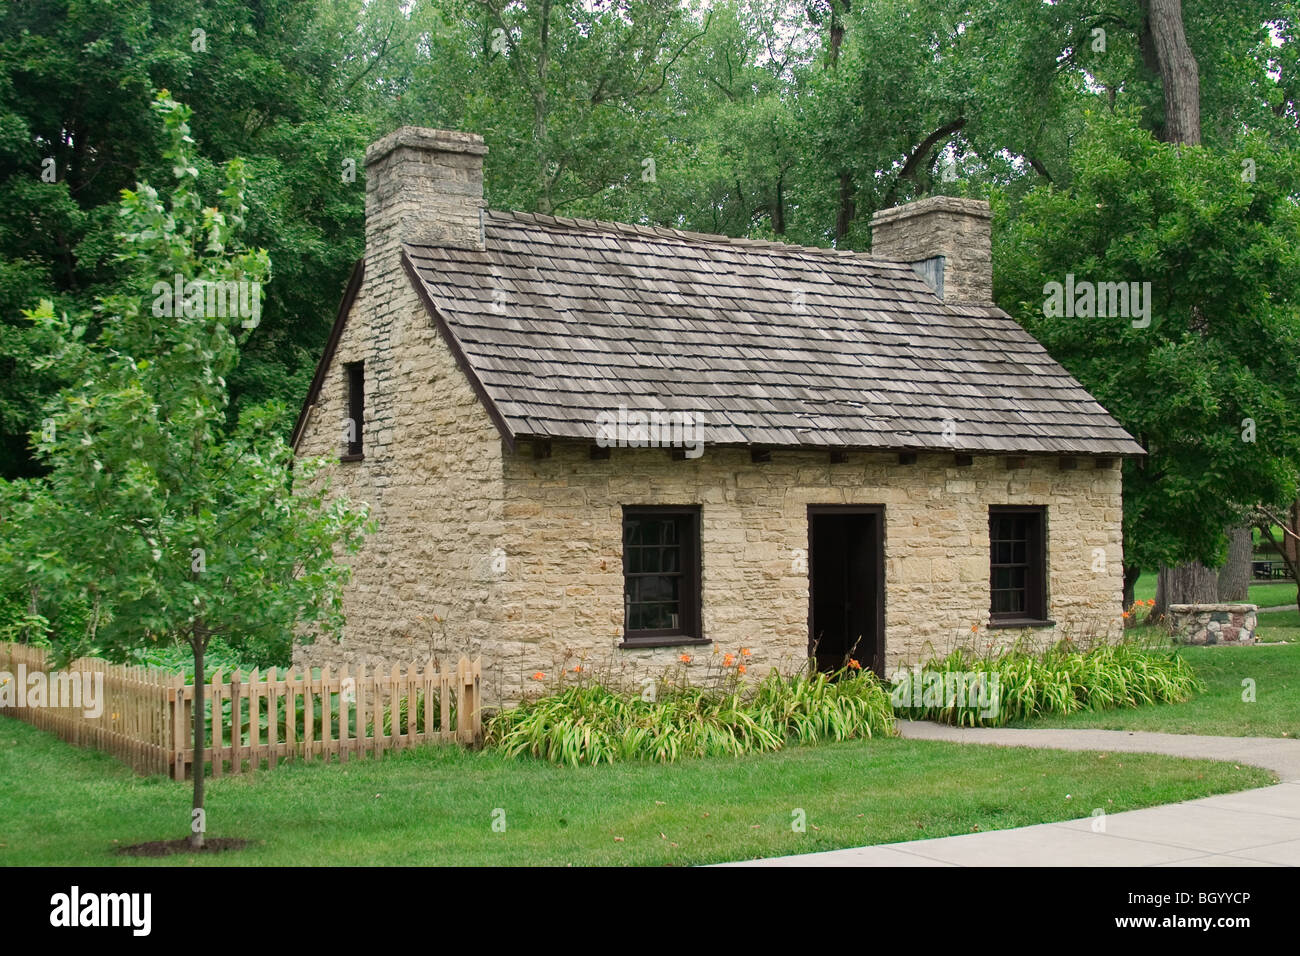 William Morris House Built around 1815 Carillon Historical Park, Dayton Ohio Stock Photo